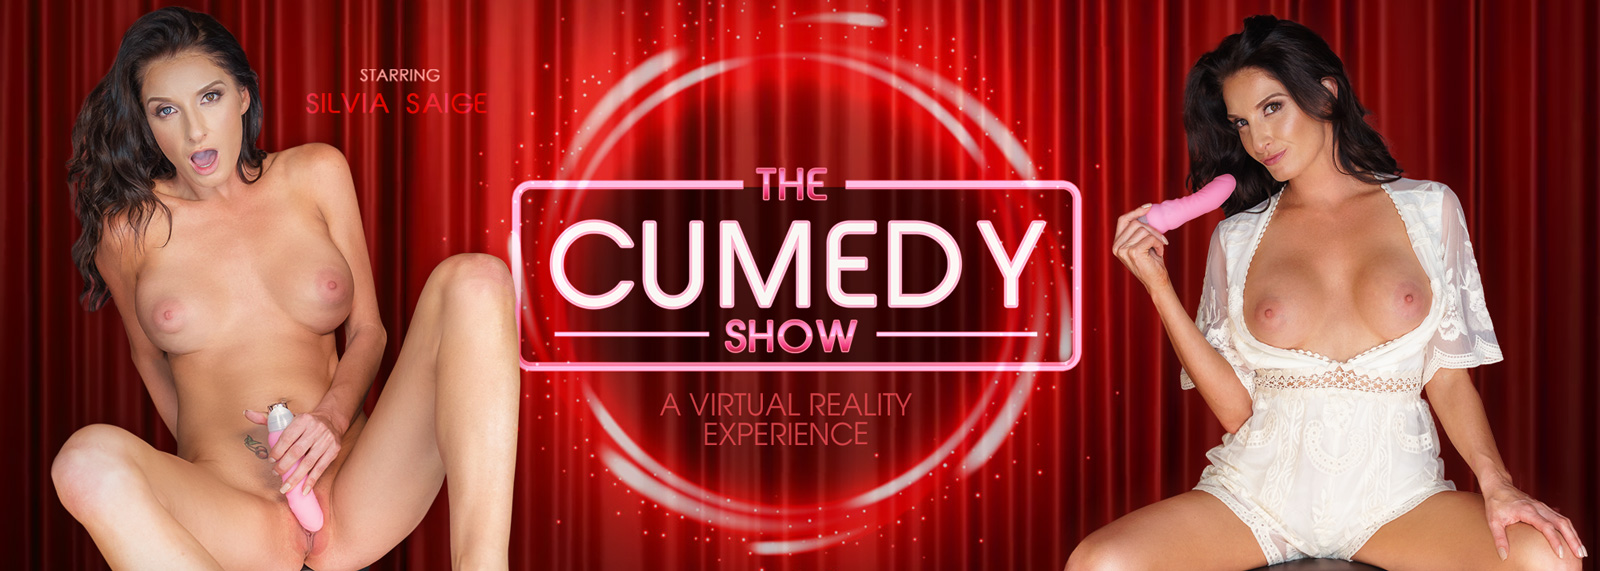 The Cumedy Show with Silvia Saige  Slideshow